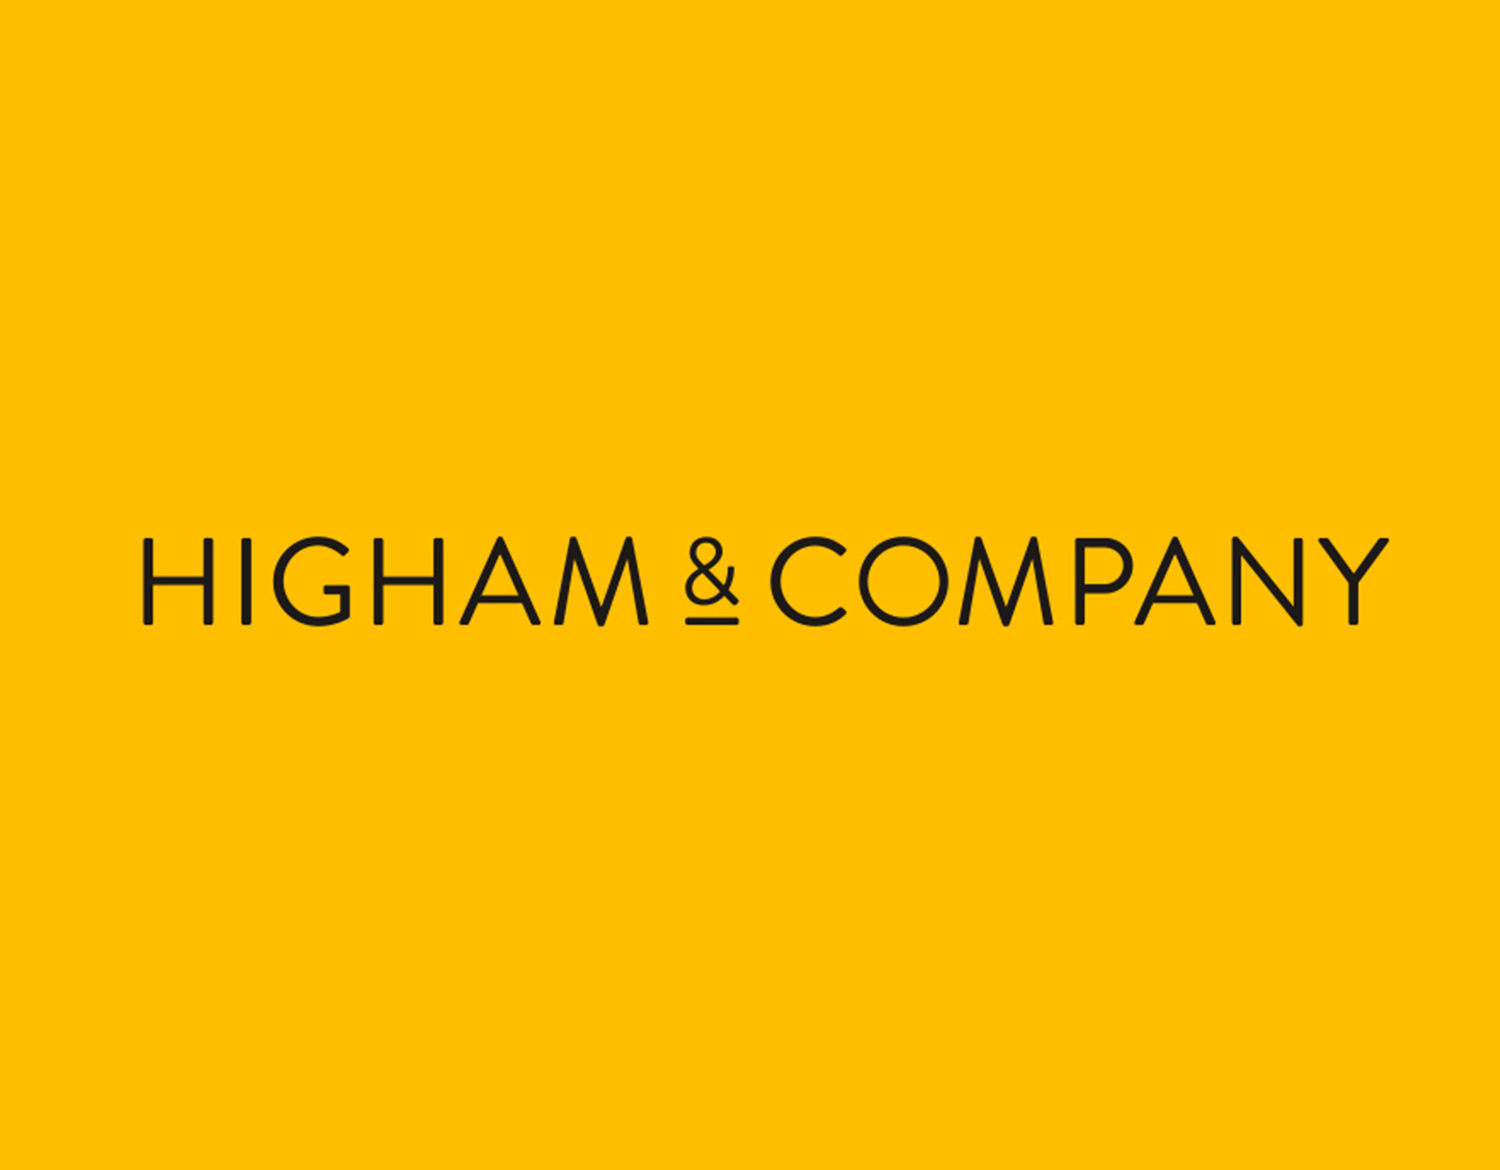 Higham & Company - Be understood.